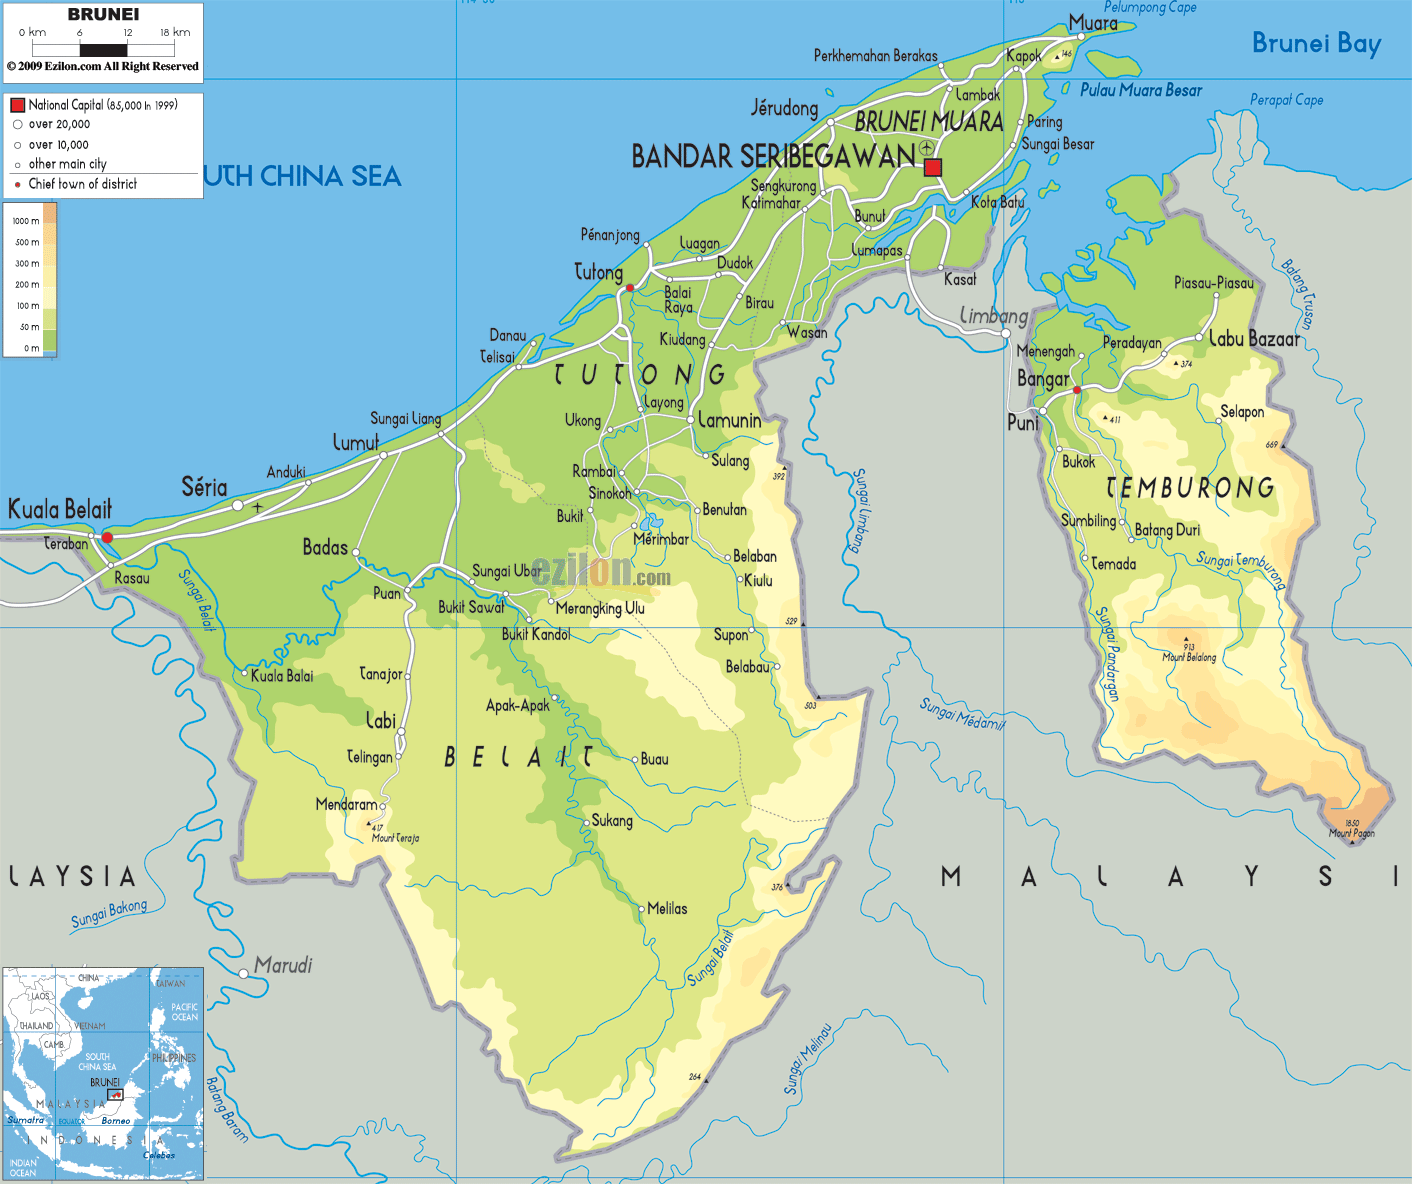 Brunei politisch karte